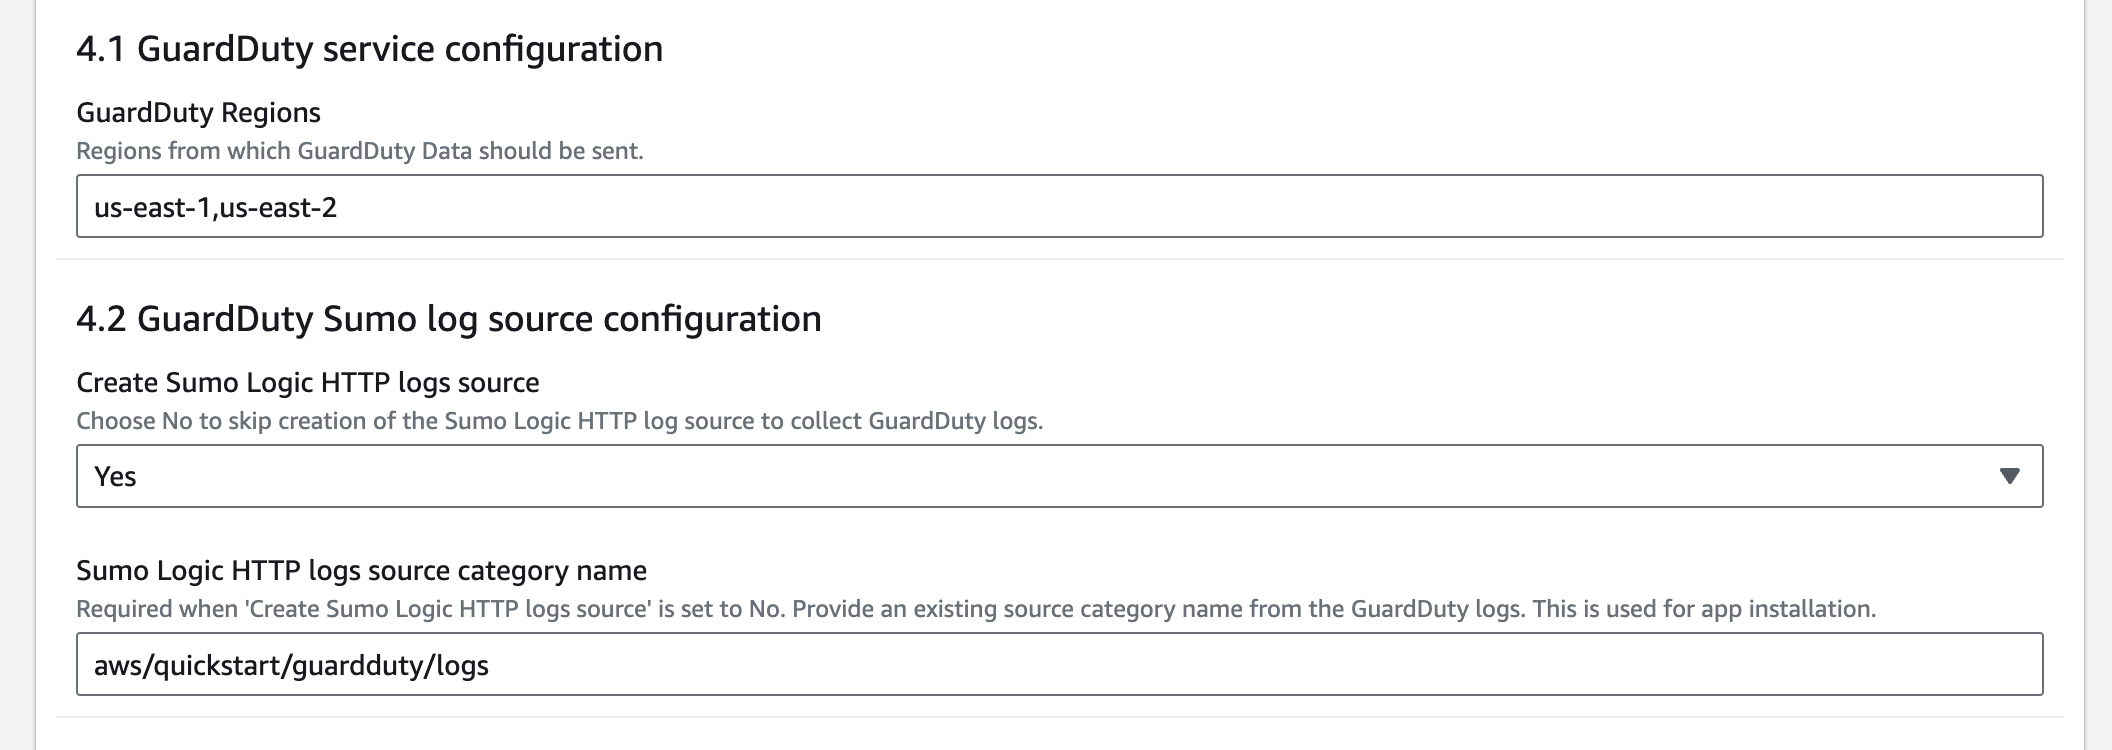 GuardDuty configuration